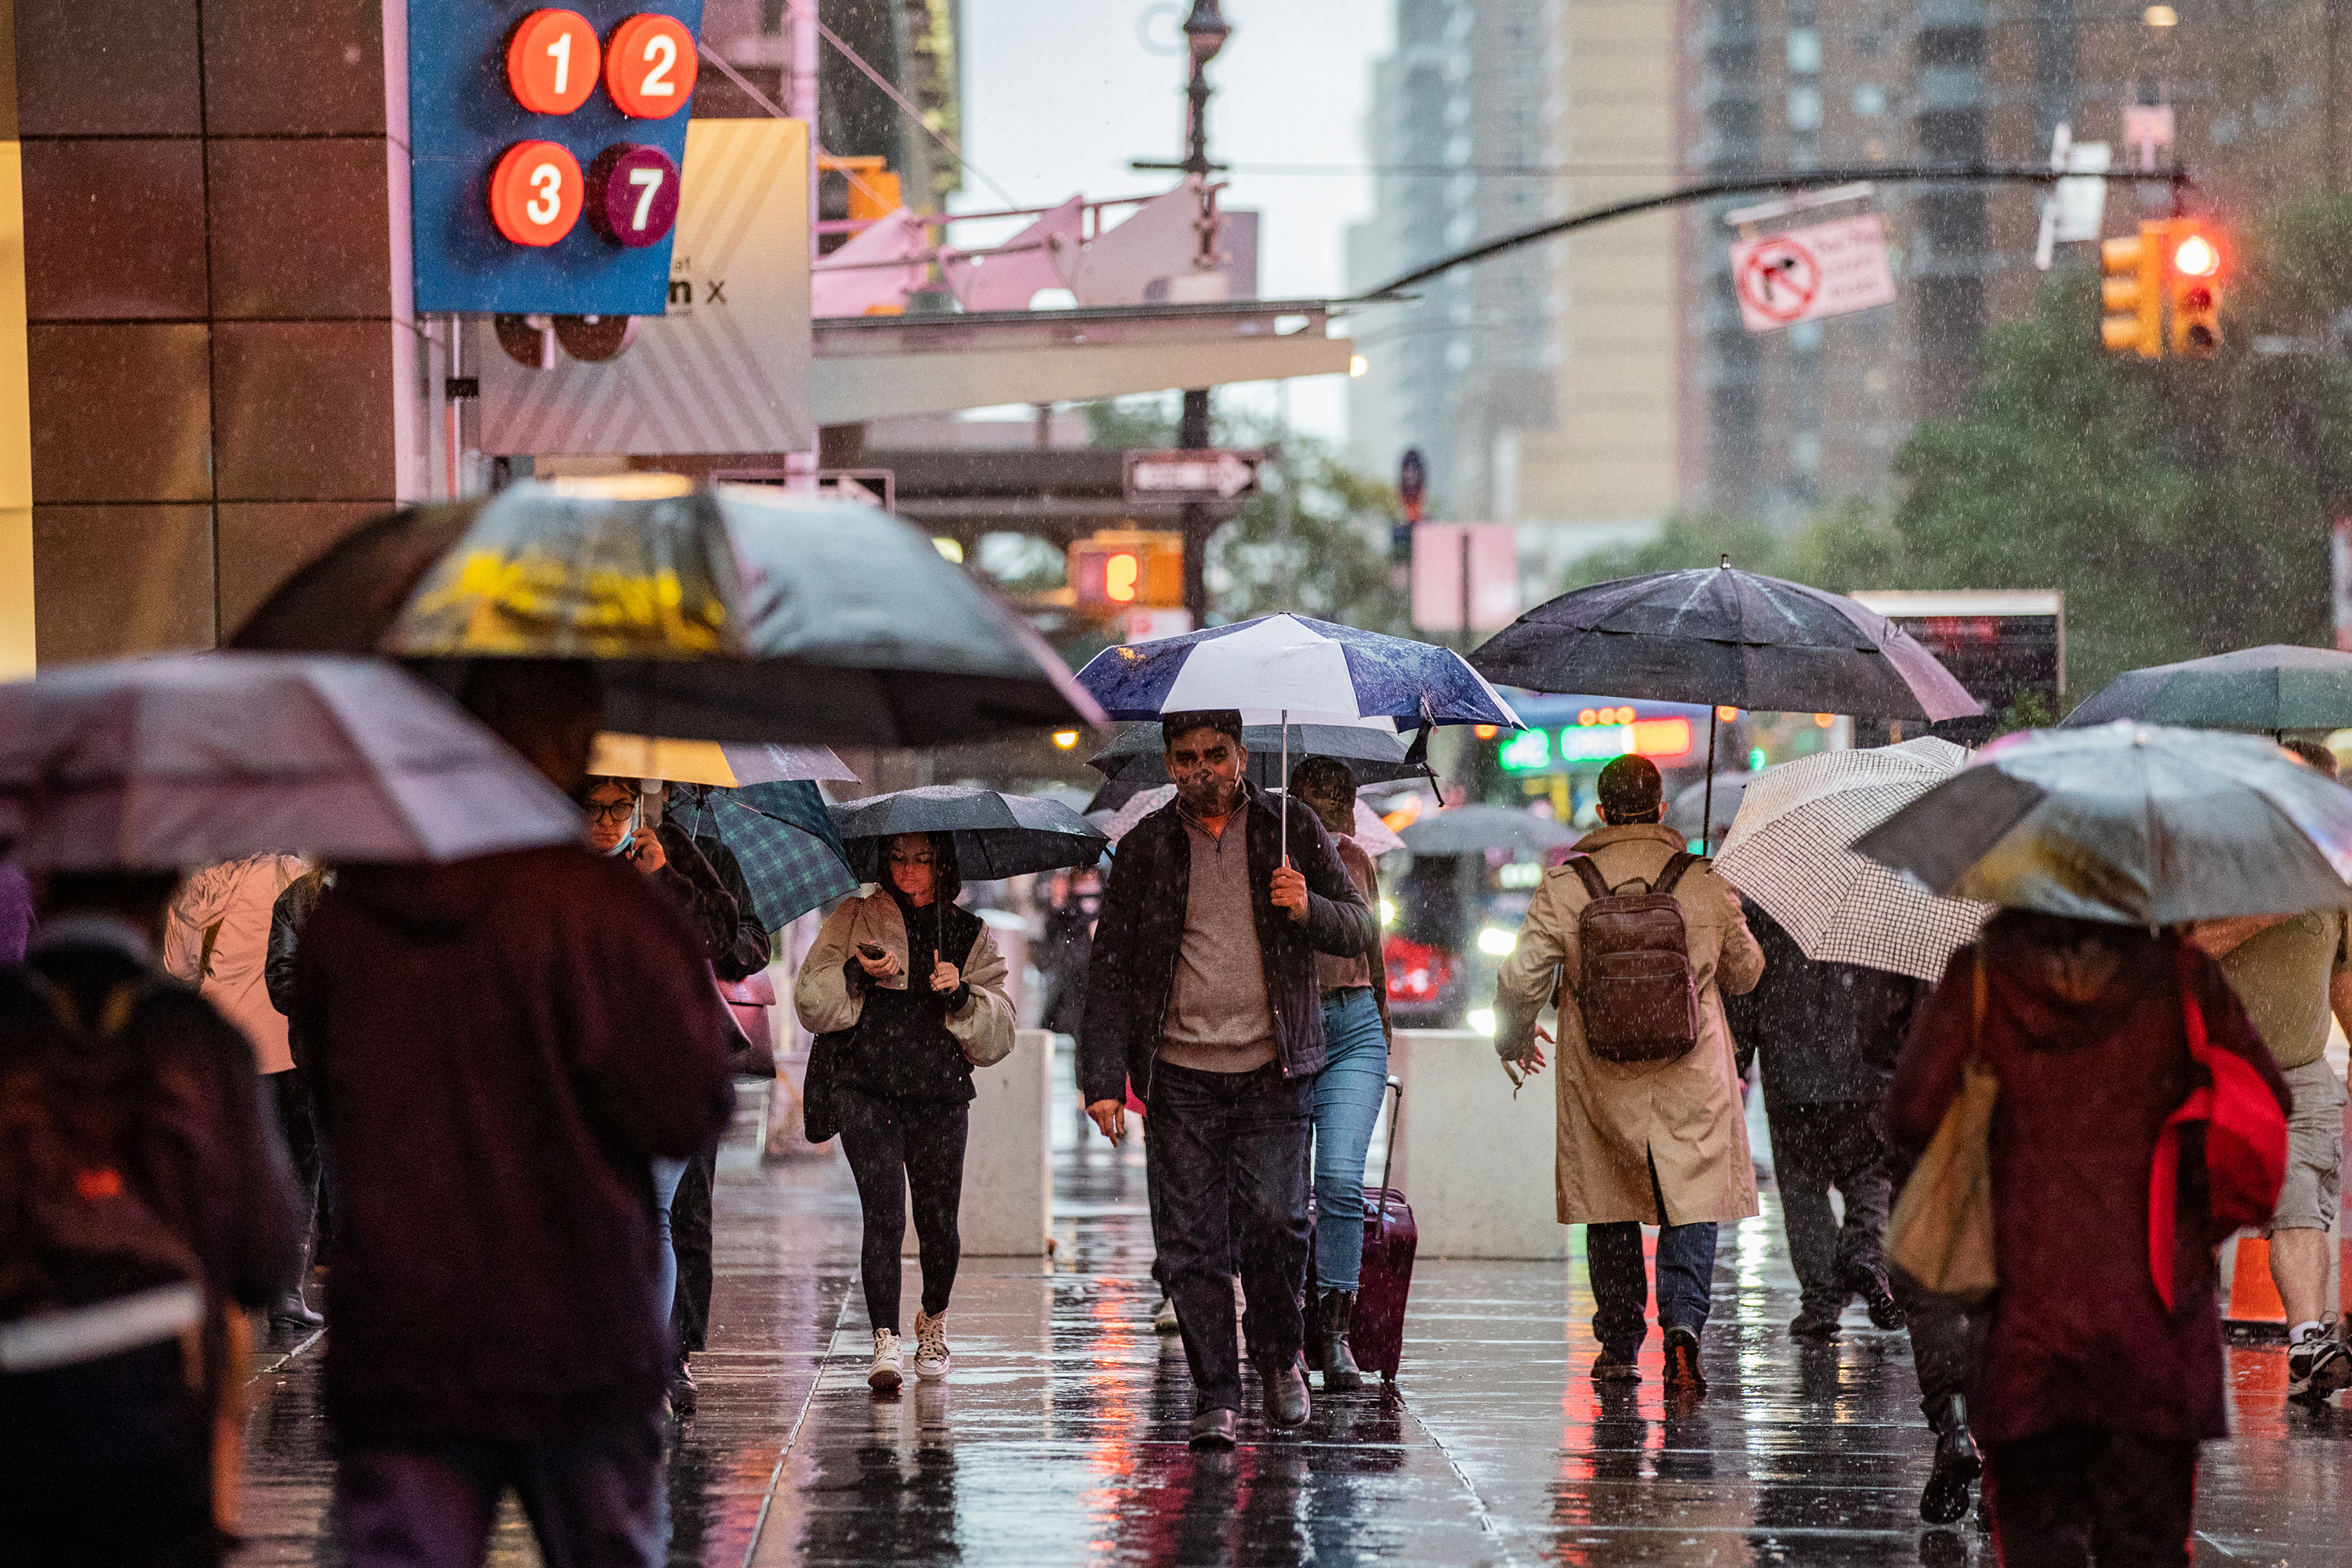 Pedestrians walk through the rain in New York, on Tuesday, October 26. 